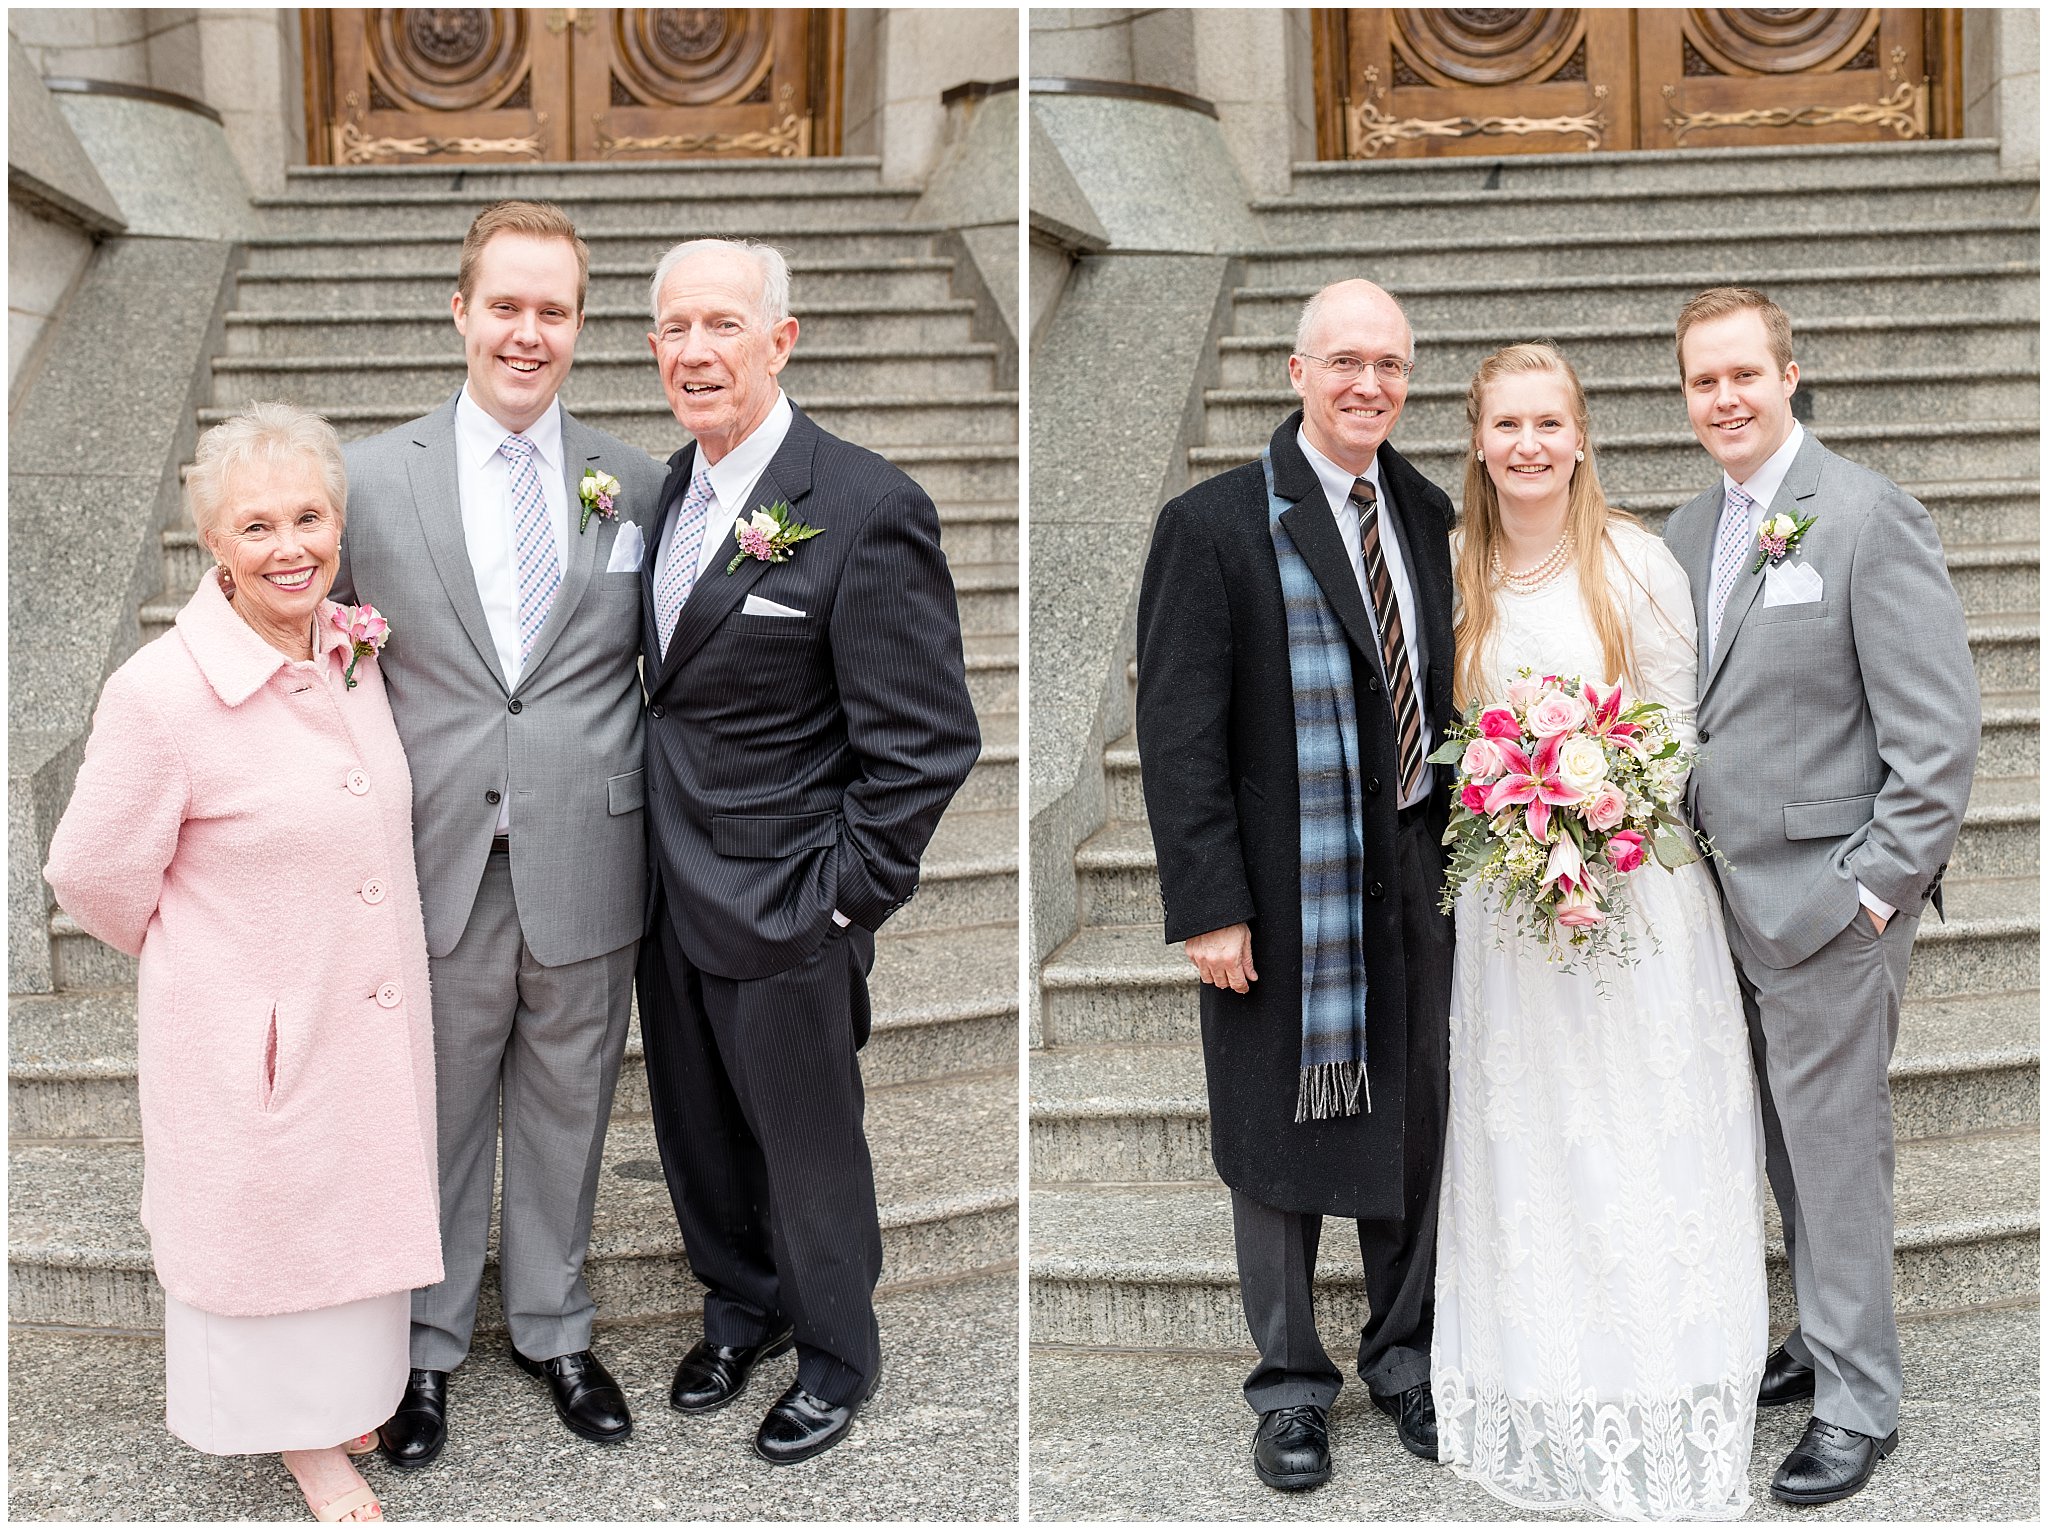 Salt Lake temple family group pictures | spring utah wedding | rose, raspberry, and navy wedding